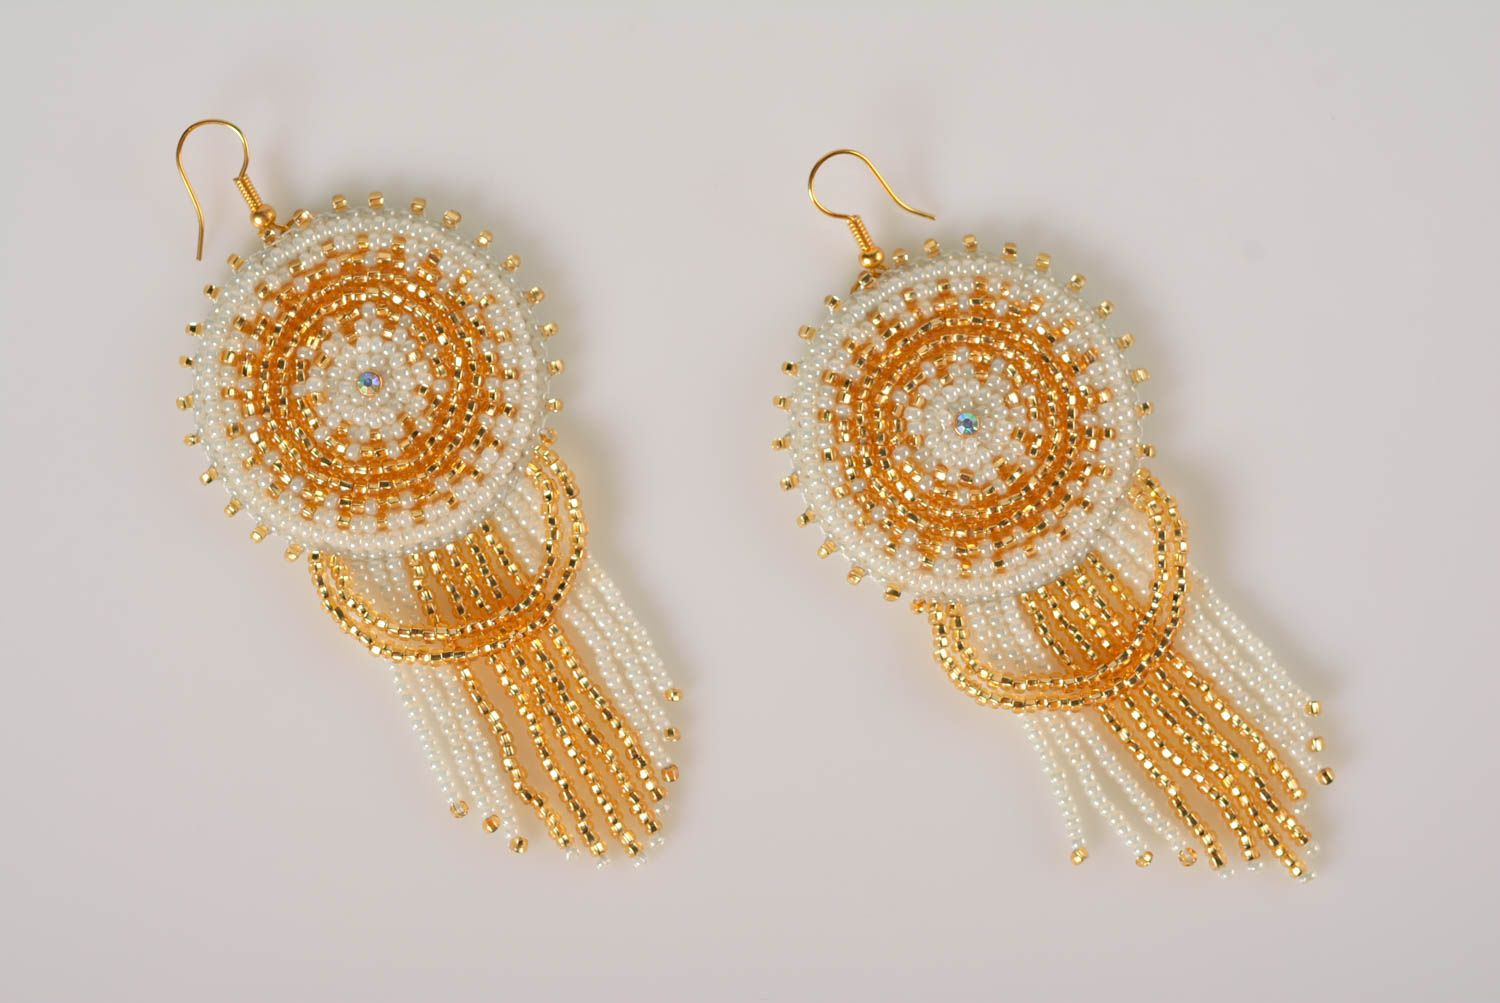 Handmade earrings designer earrings beaded earrings beads accessory unusual gift photo 3